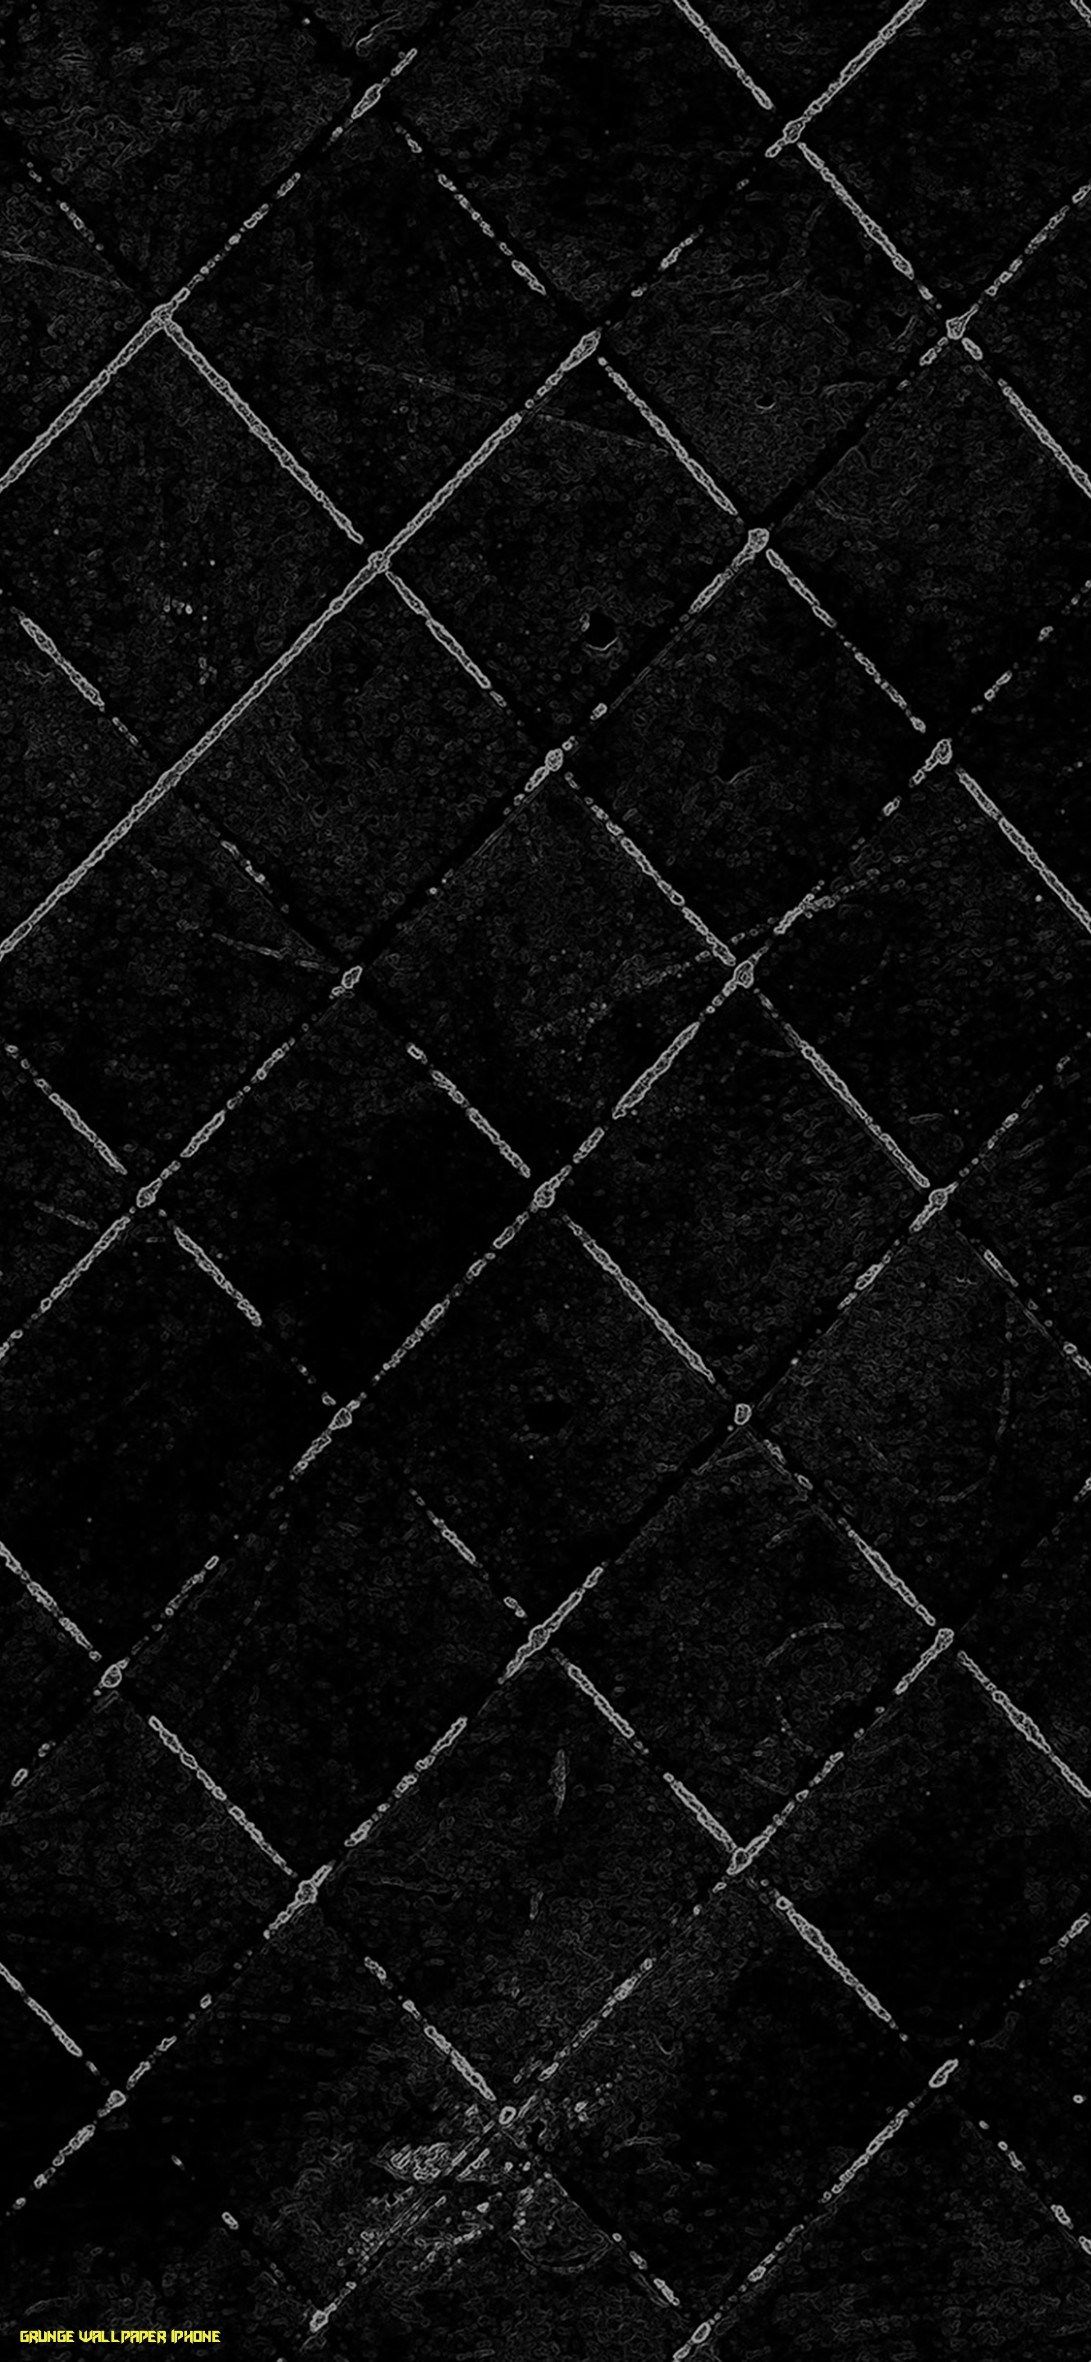 Grunge Black Aesthetic Wallpapers Wallpaper Cave grunge black aesthetic wallpapers